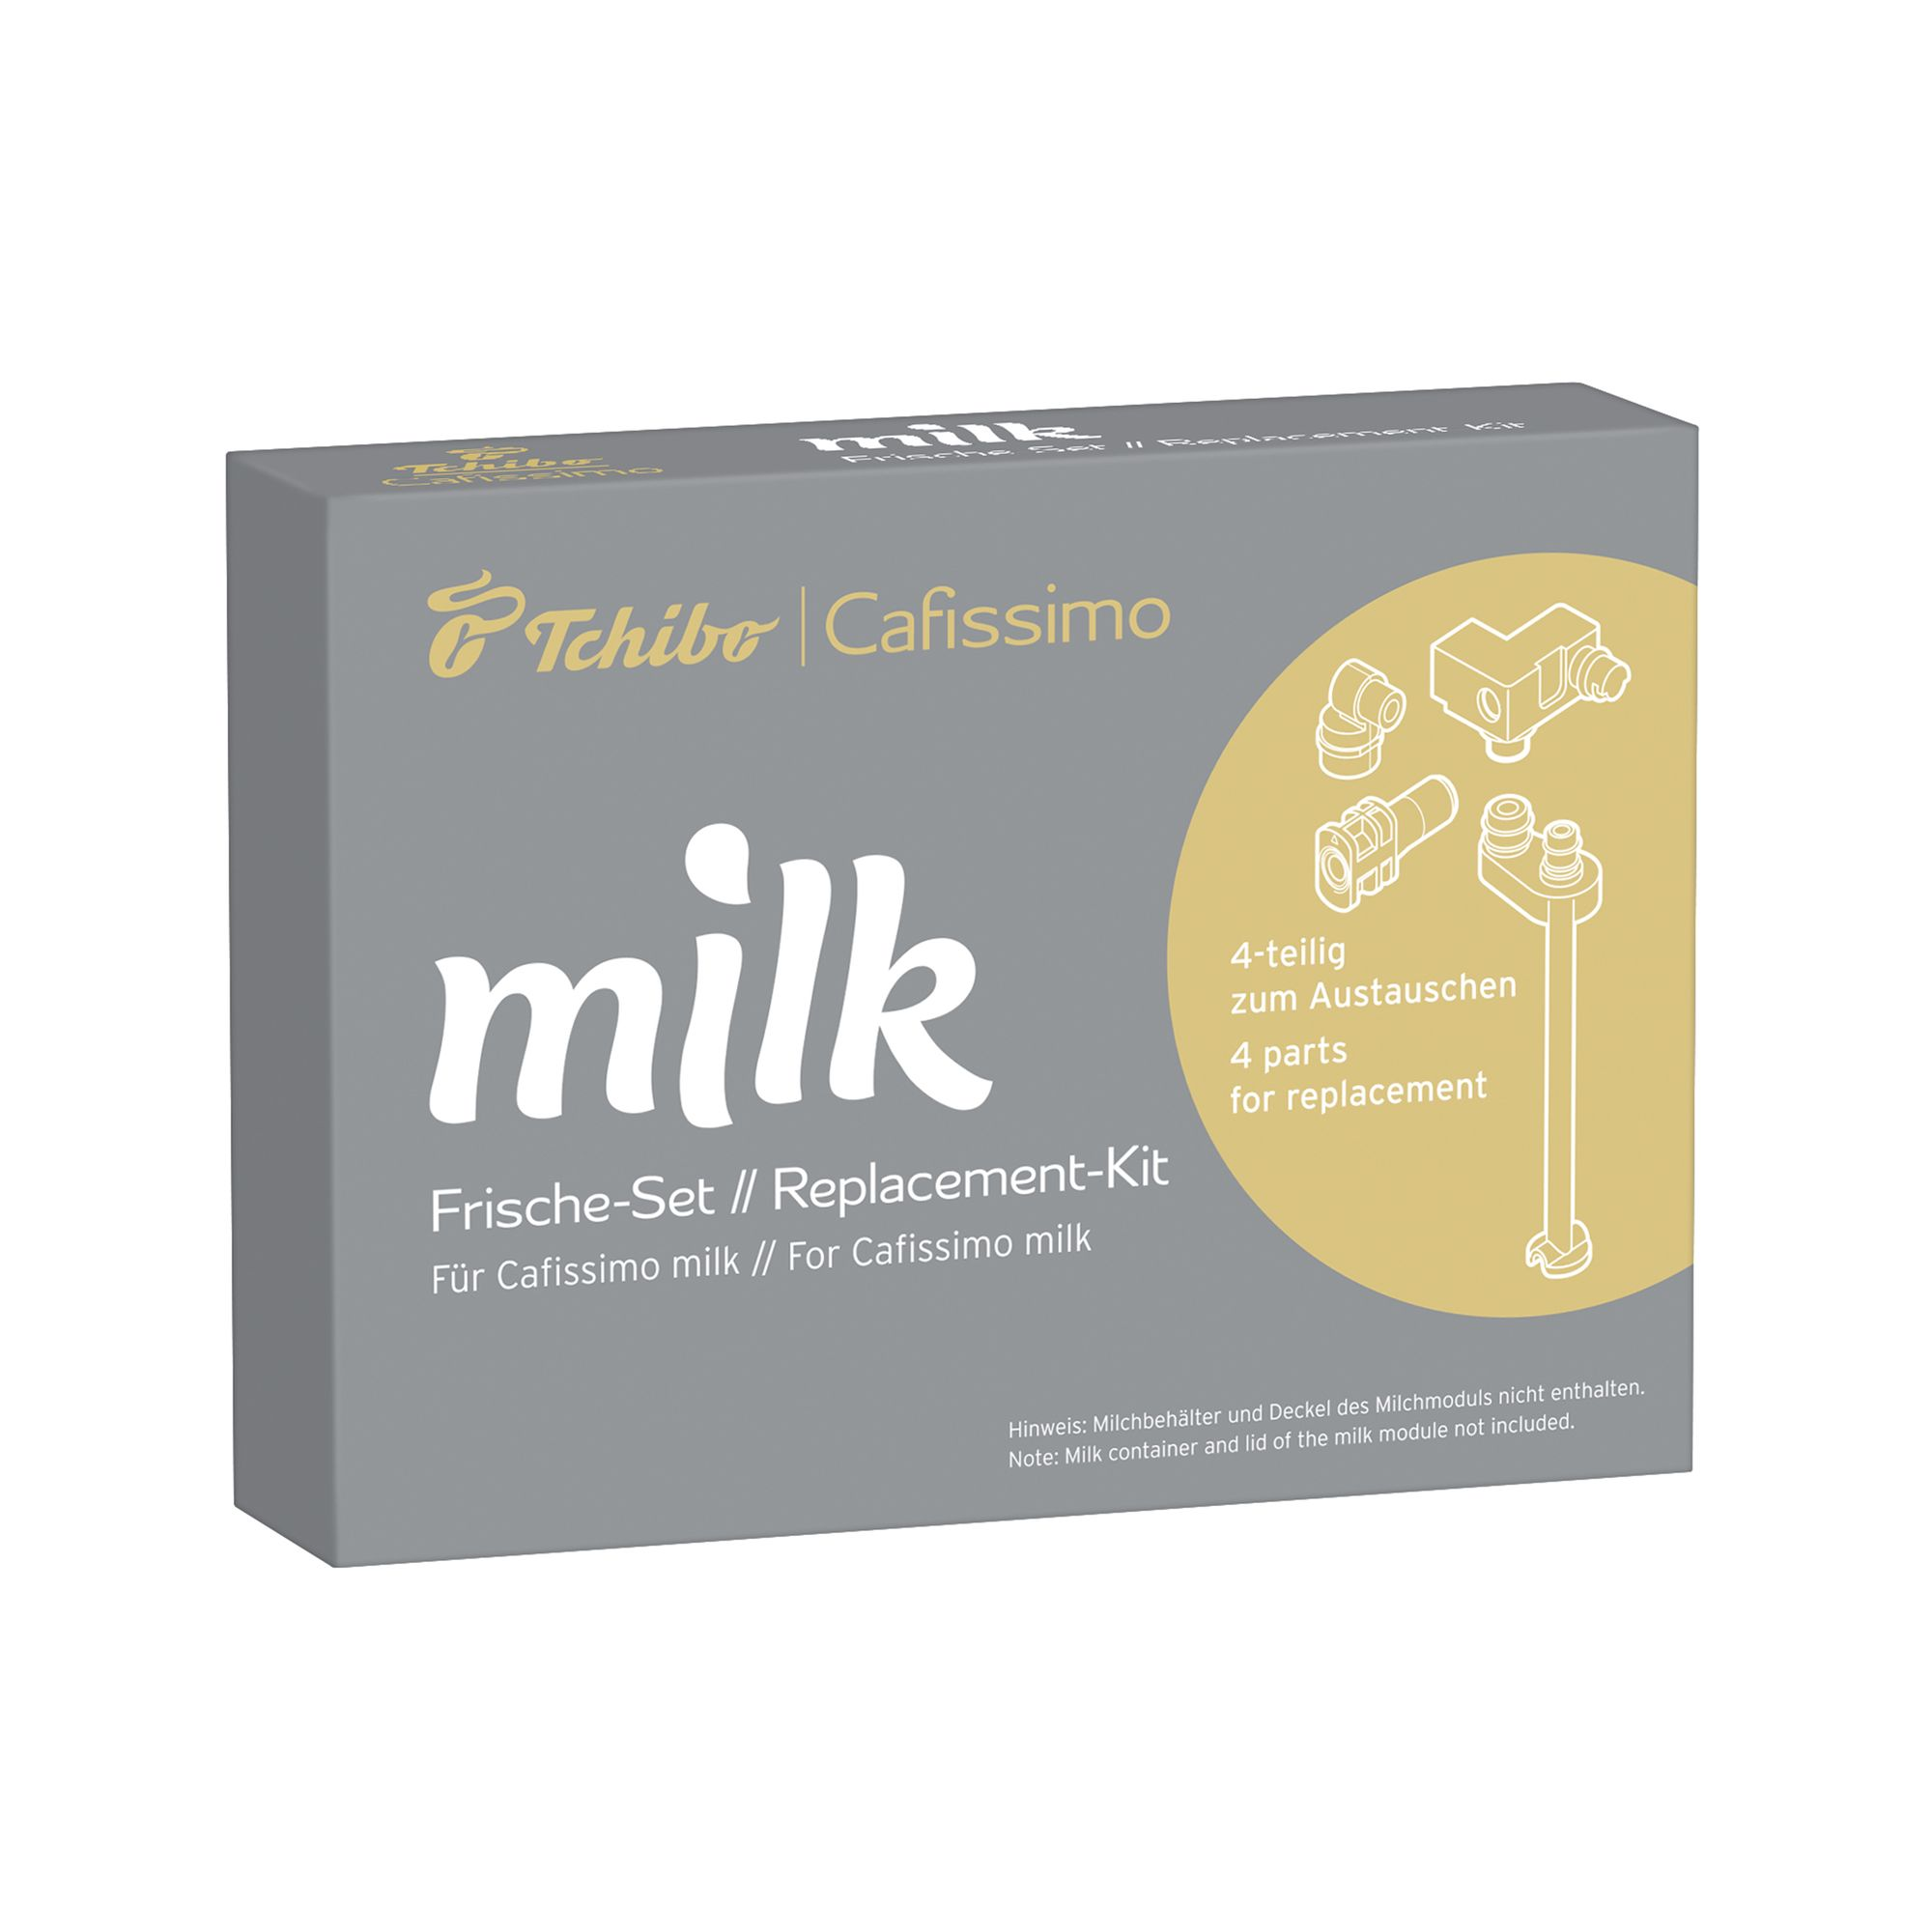 TCHIBO CAFISSIMO 601845 Frische-Set Milk Cafissimo